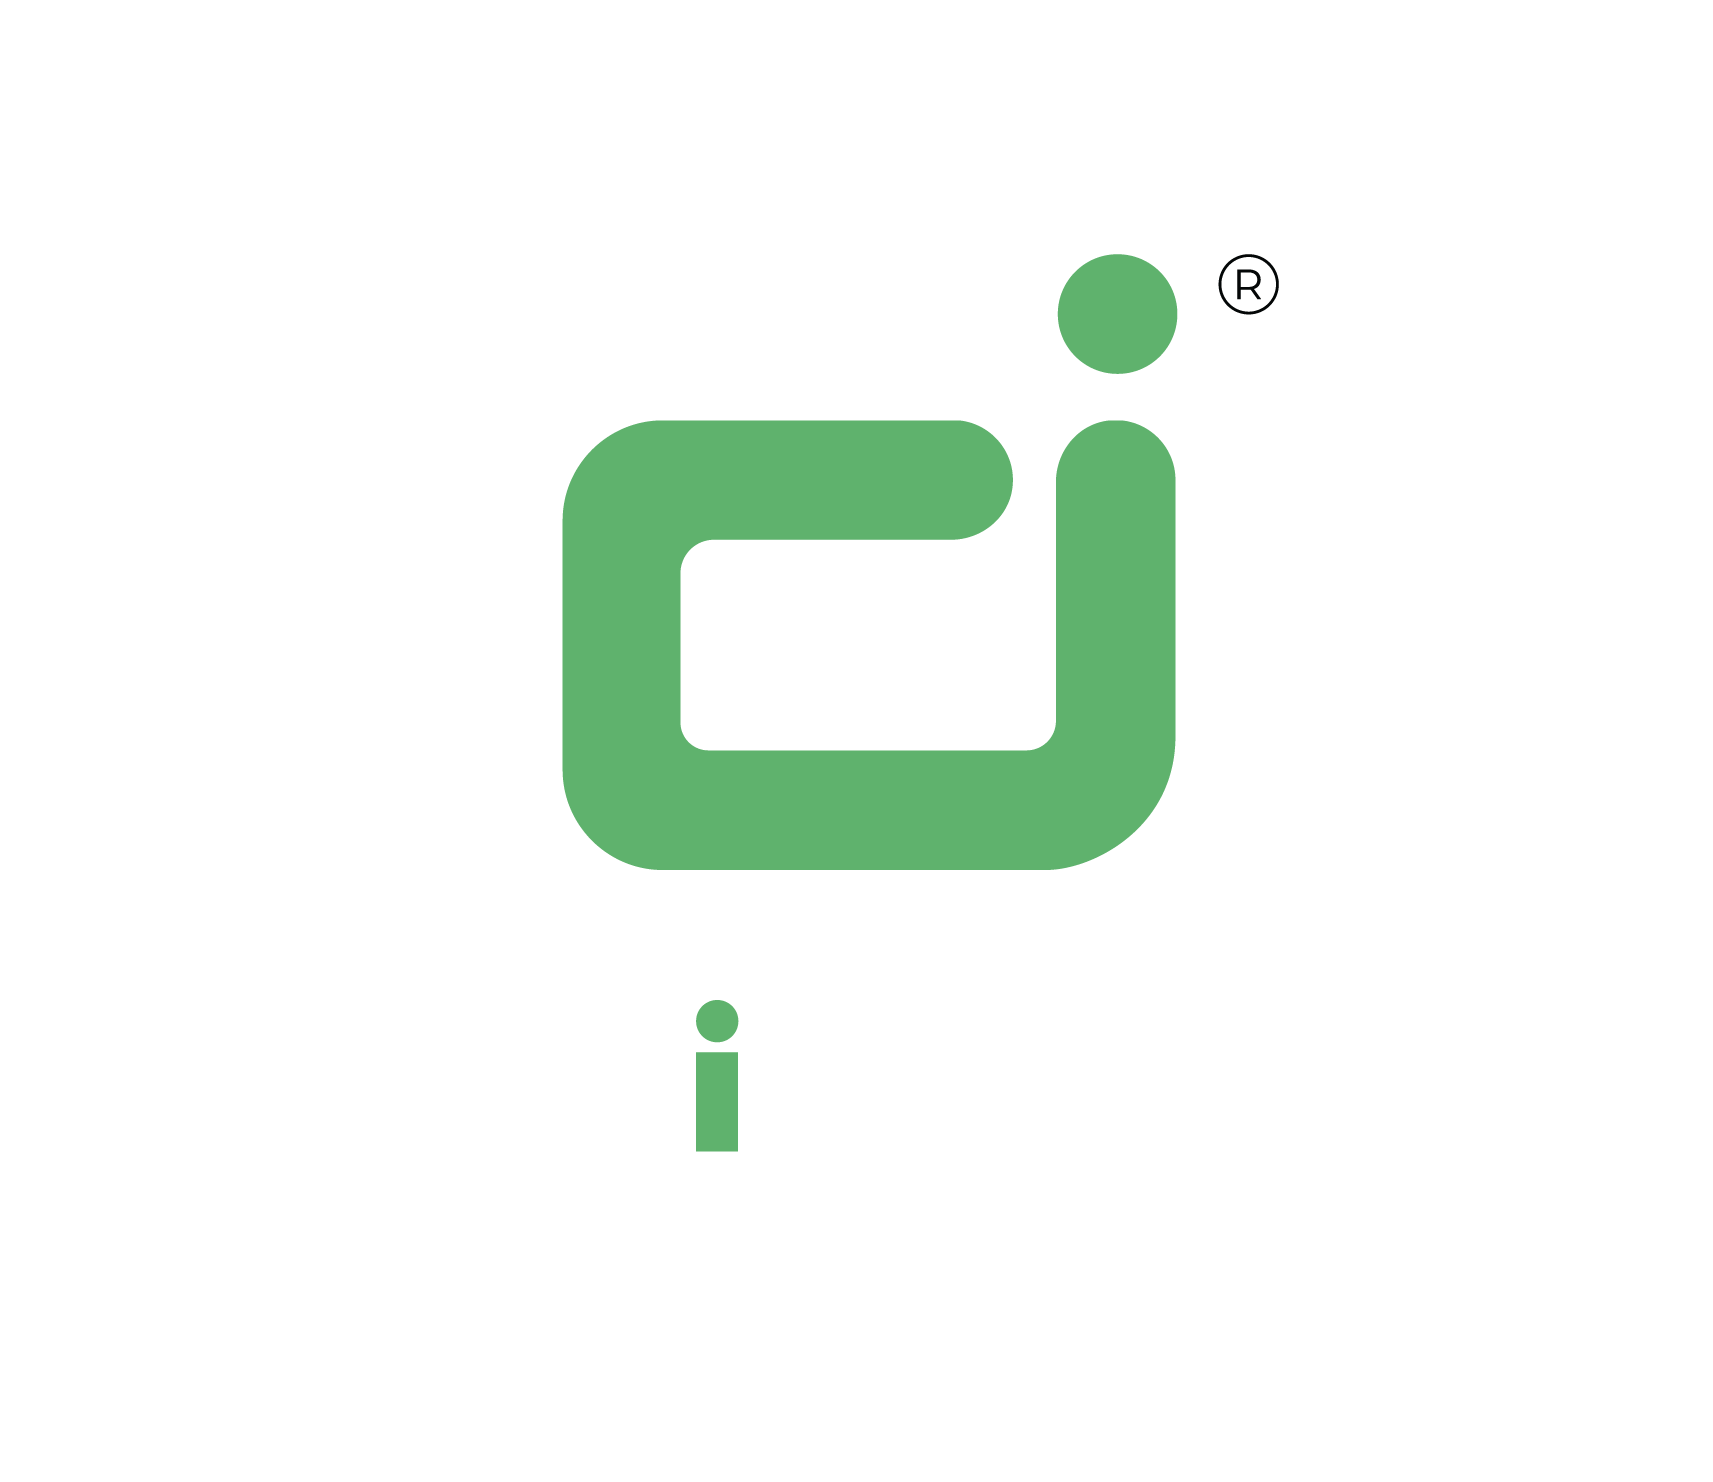 DiYES International School